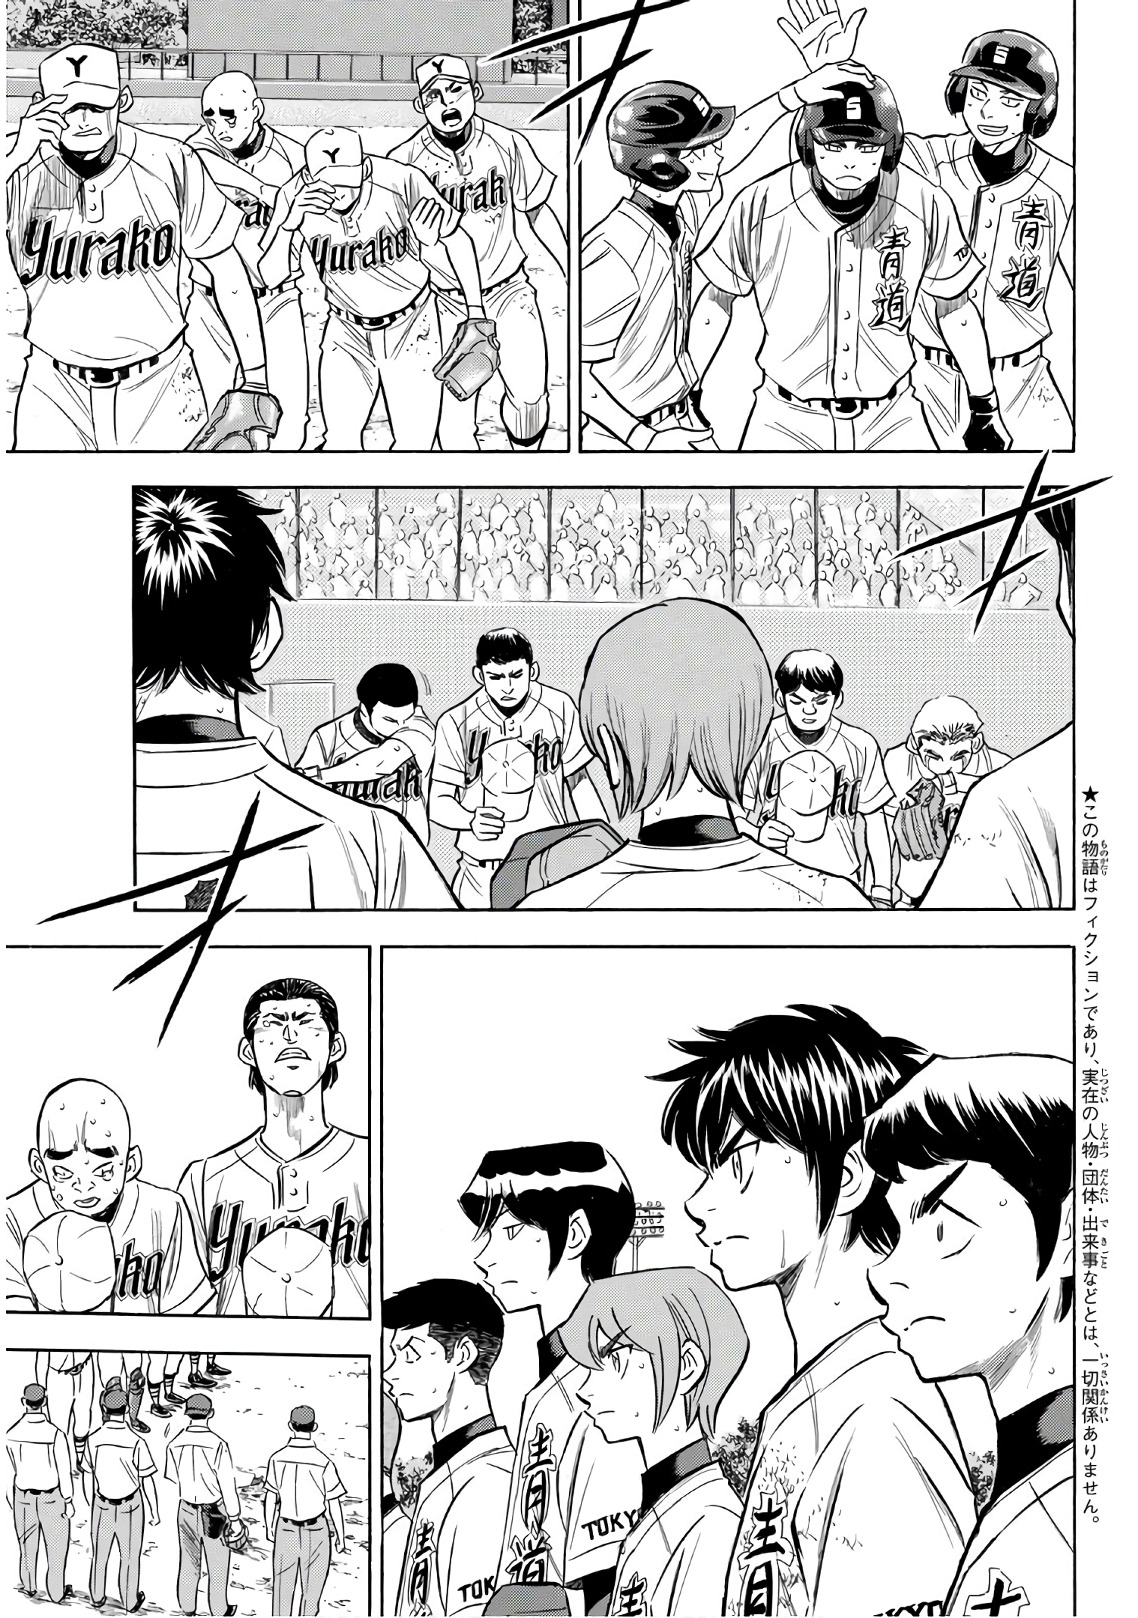 Manga Mogura RE on X: Baseball Manga Daiya no Ace - Act II vol